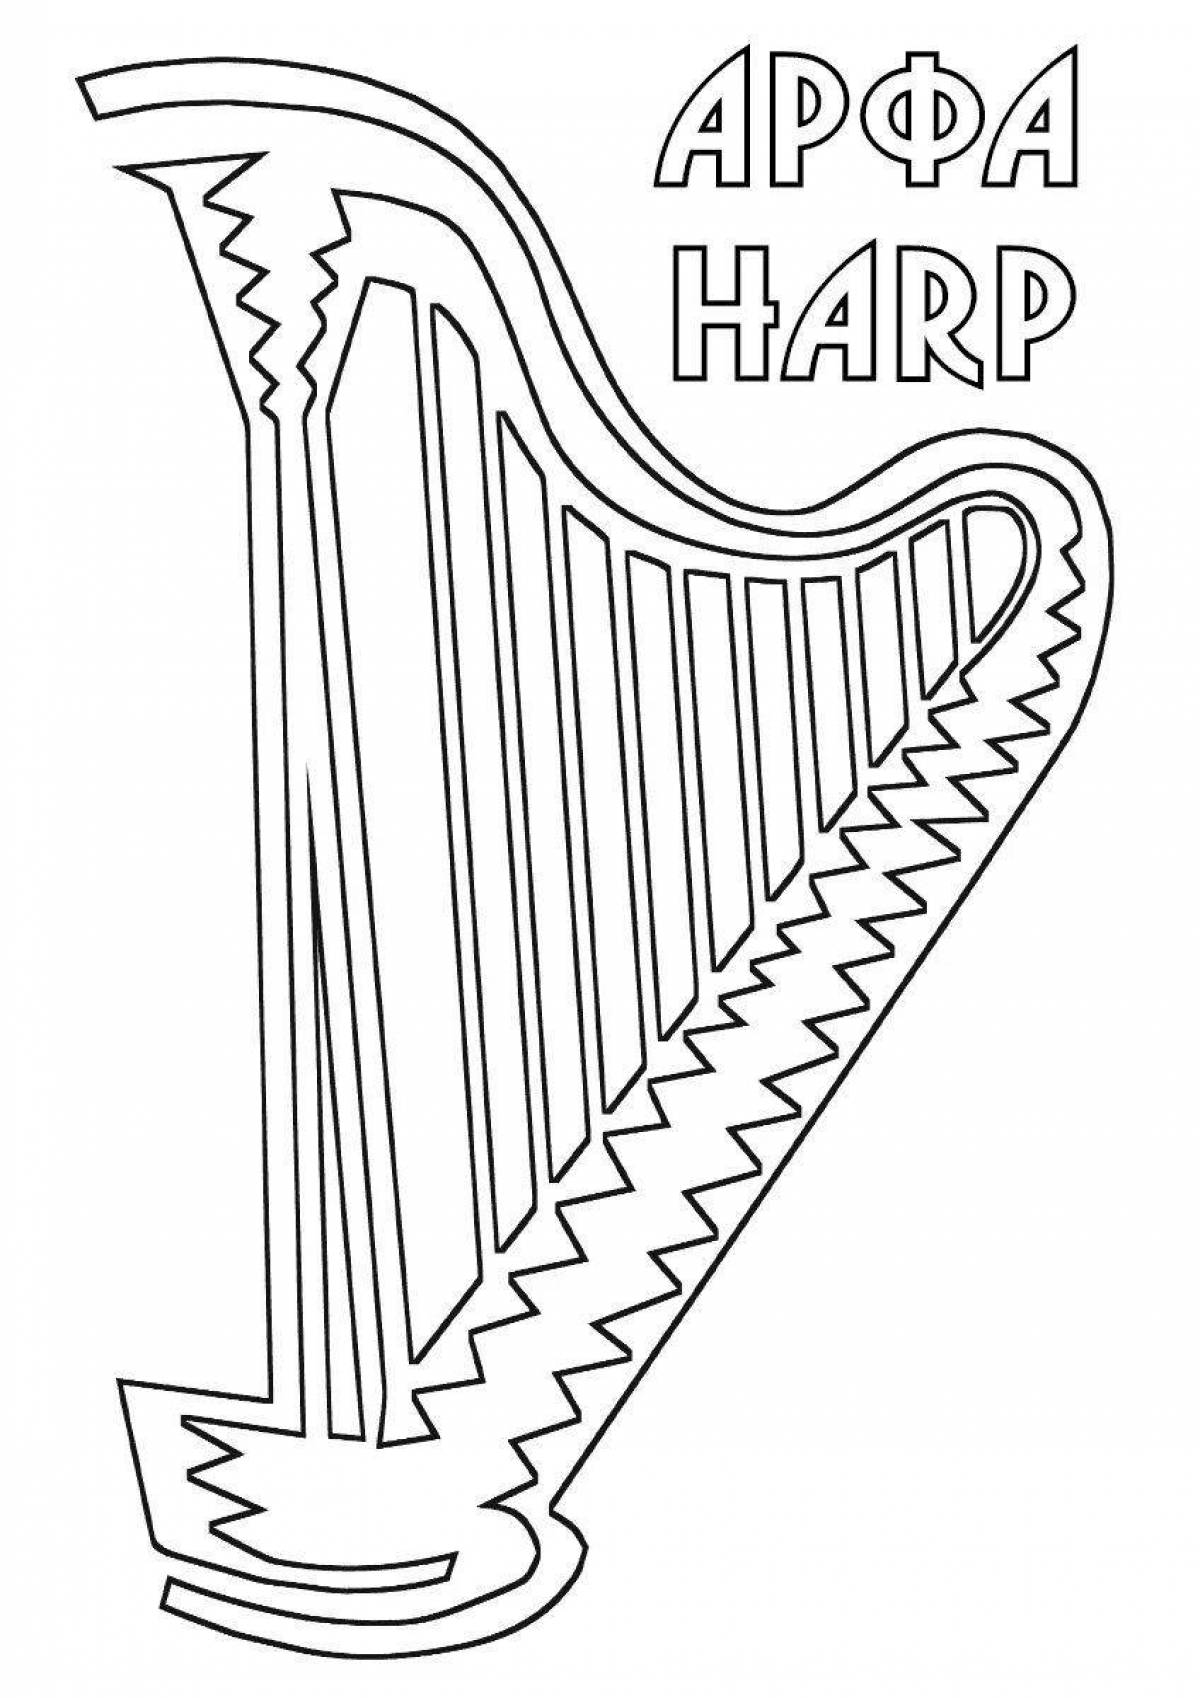 Cute harp coloring book for kids